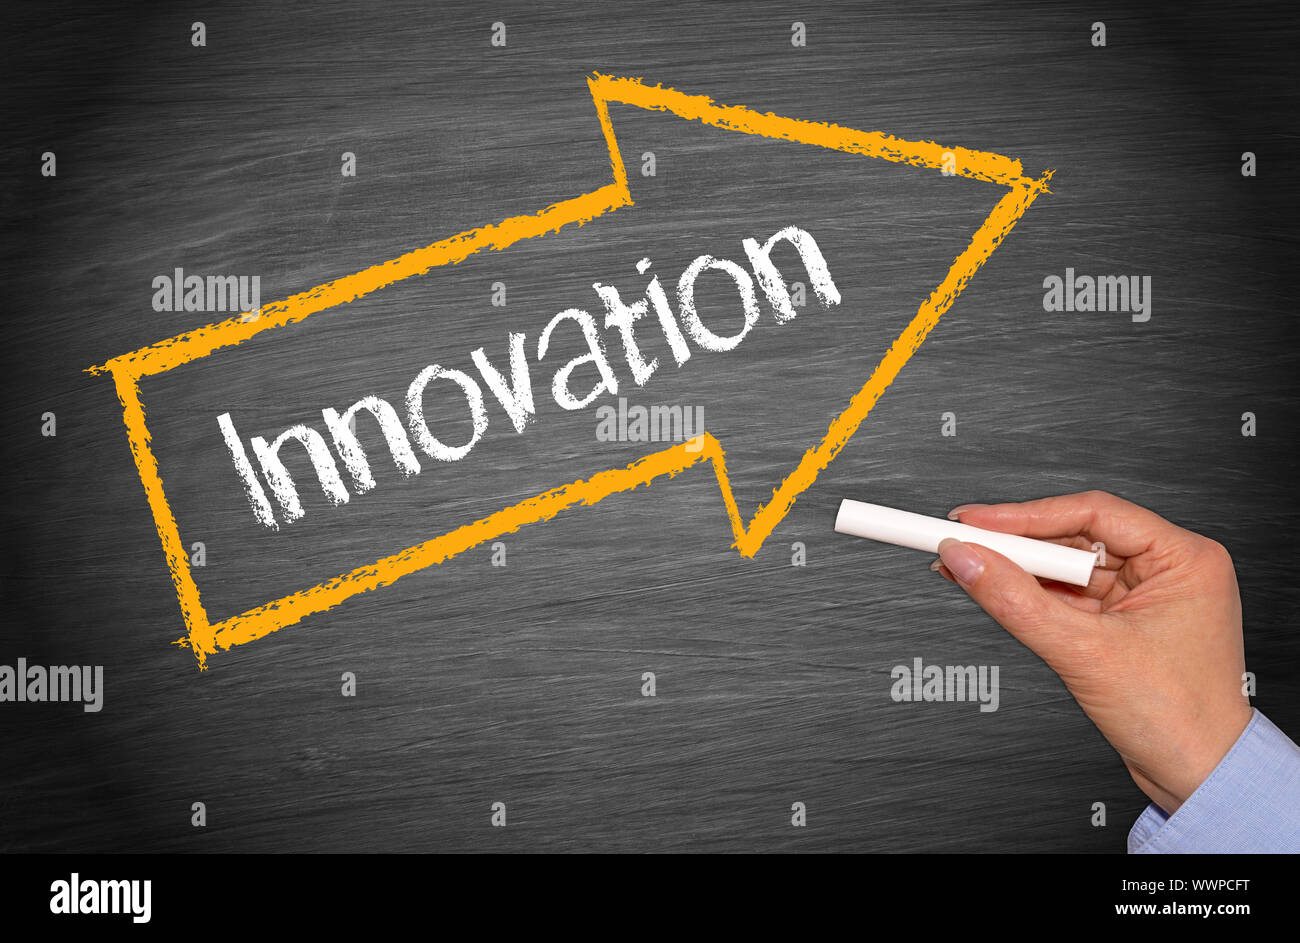 Innovation - Arrow with text Stock Photo